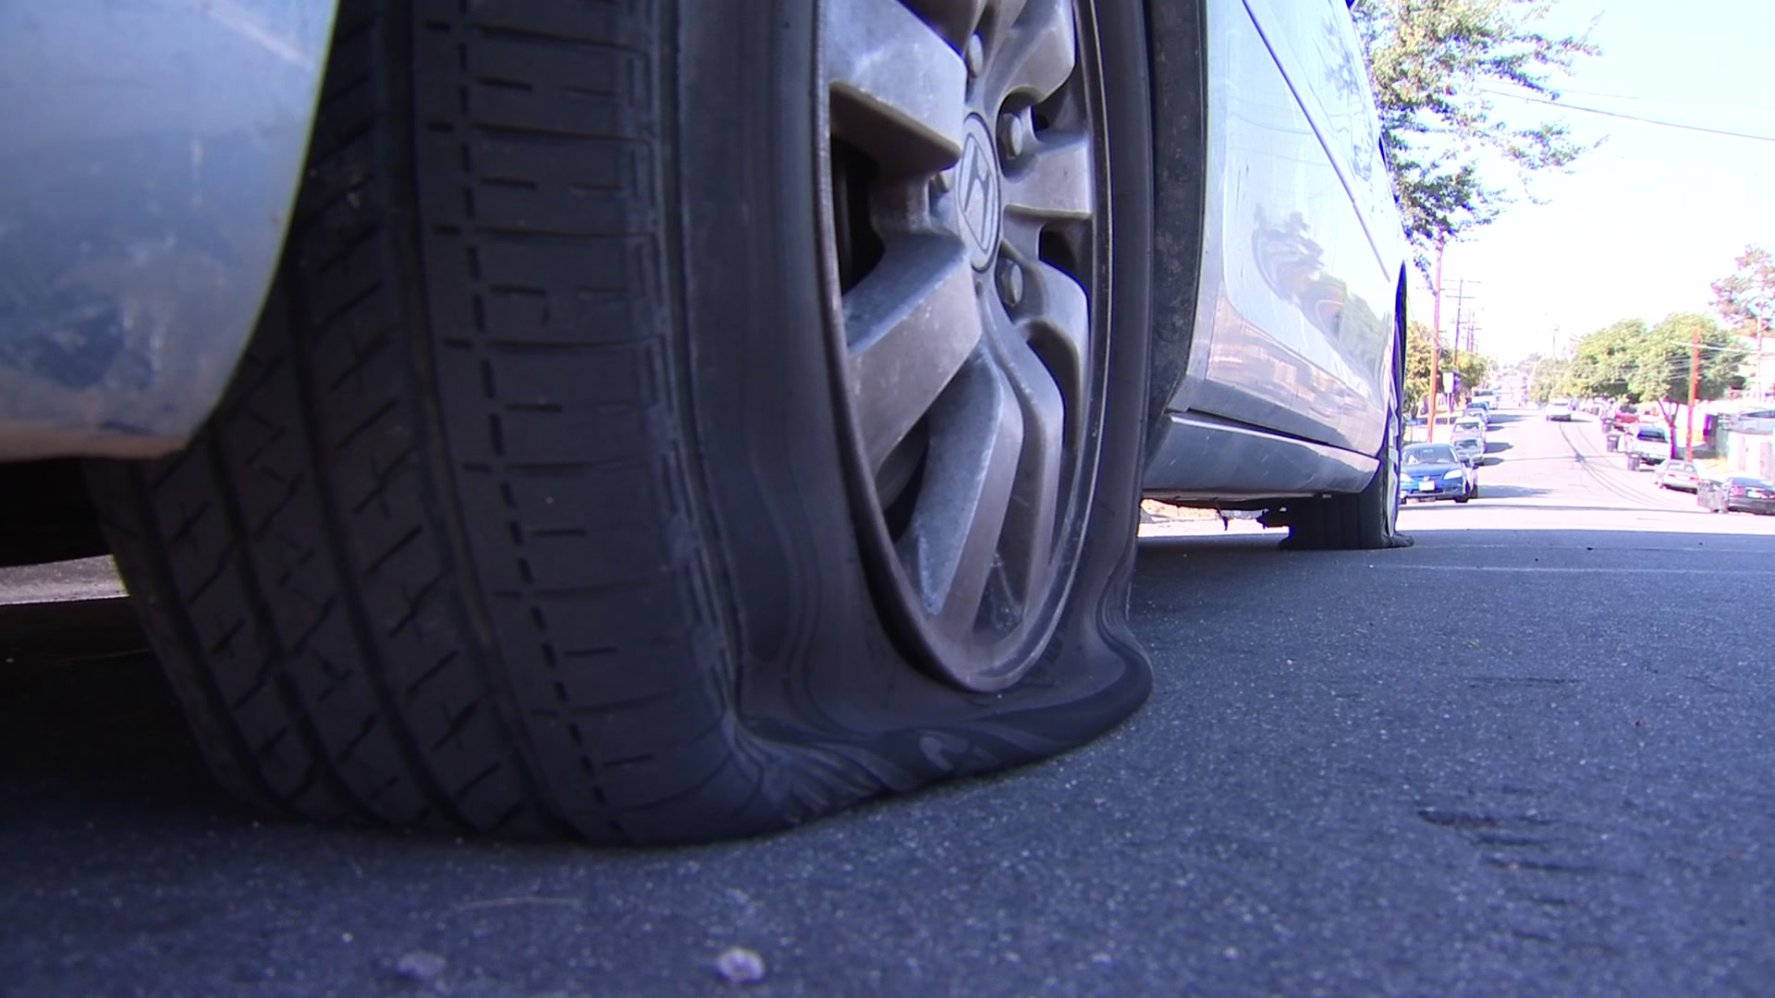 Tires Slashed On 20 Cars In Eastern San Diego Neighborhoods Overnight Nbc 7 San Diego